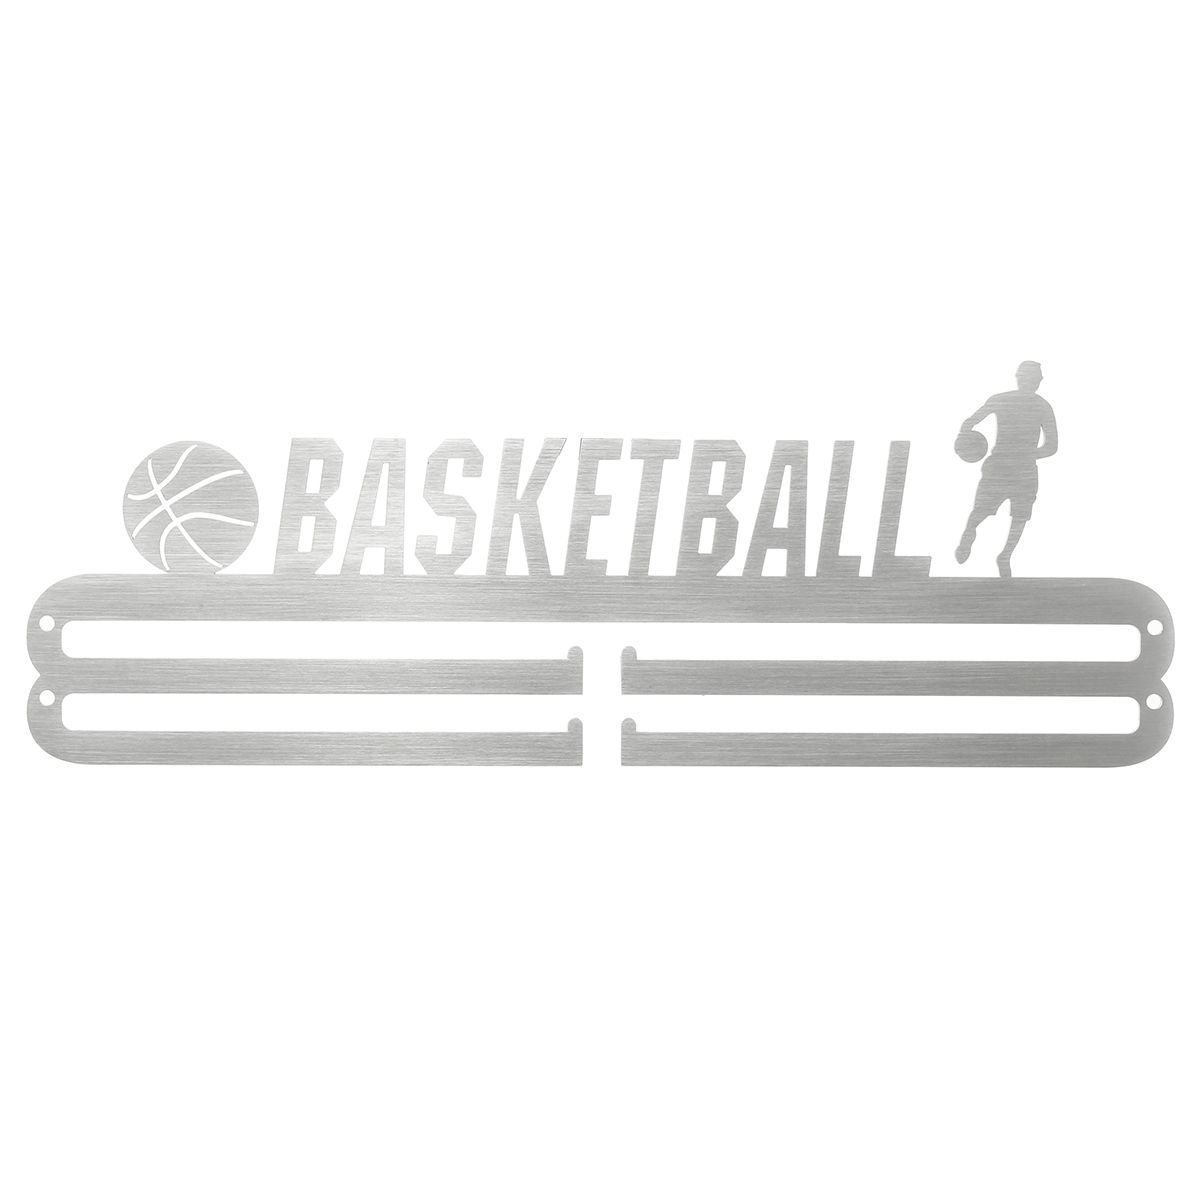 400x142x2mm-Sporting-Medal-Hangers-Gym-Football-Basketball-Match-Rack-Wall-Display-Holder-1679195